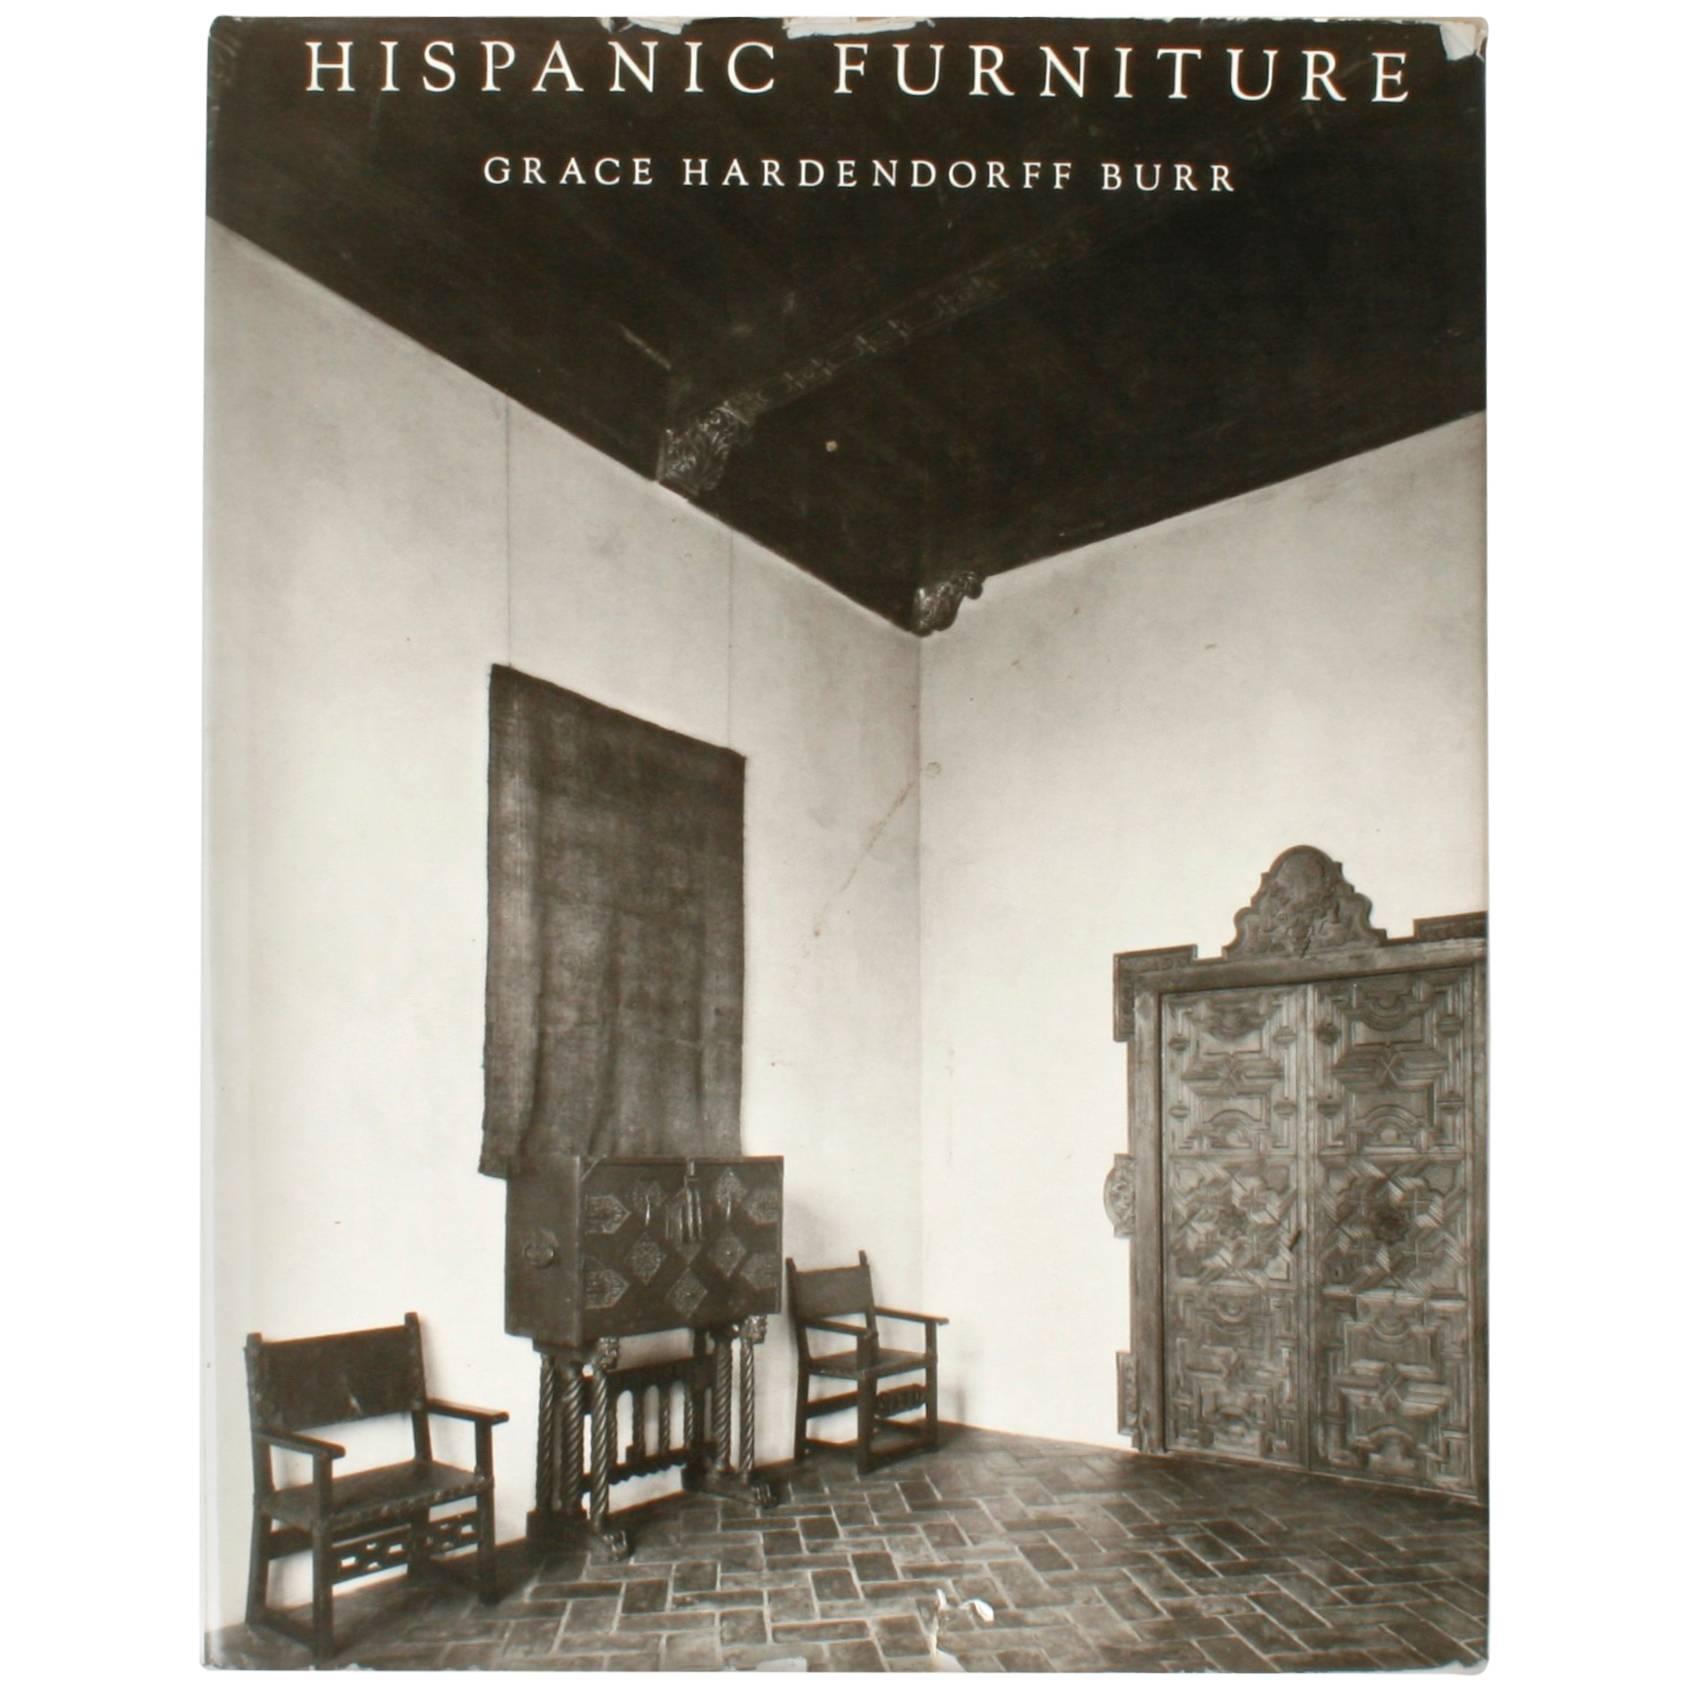 Hispanic Furniture by Grace Hardenddorff Burr